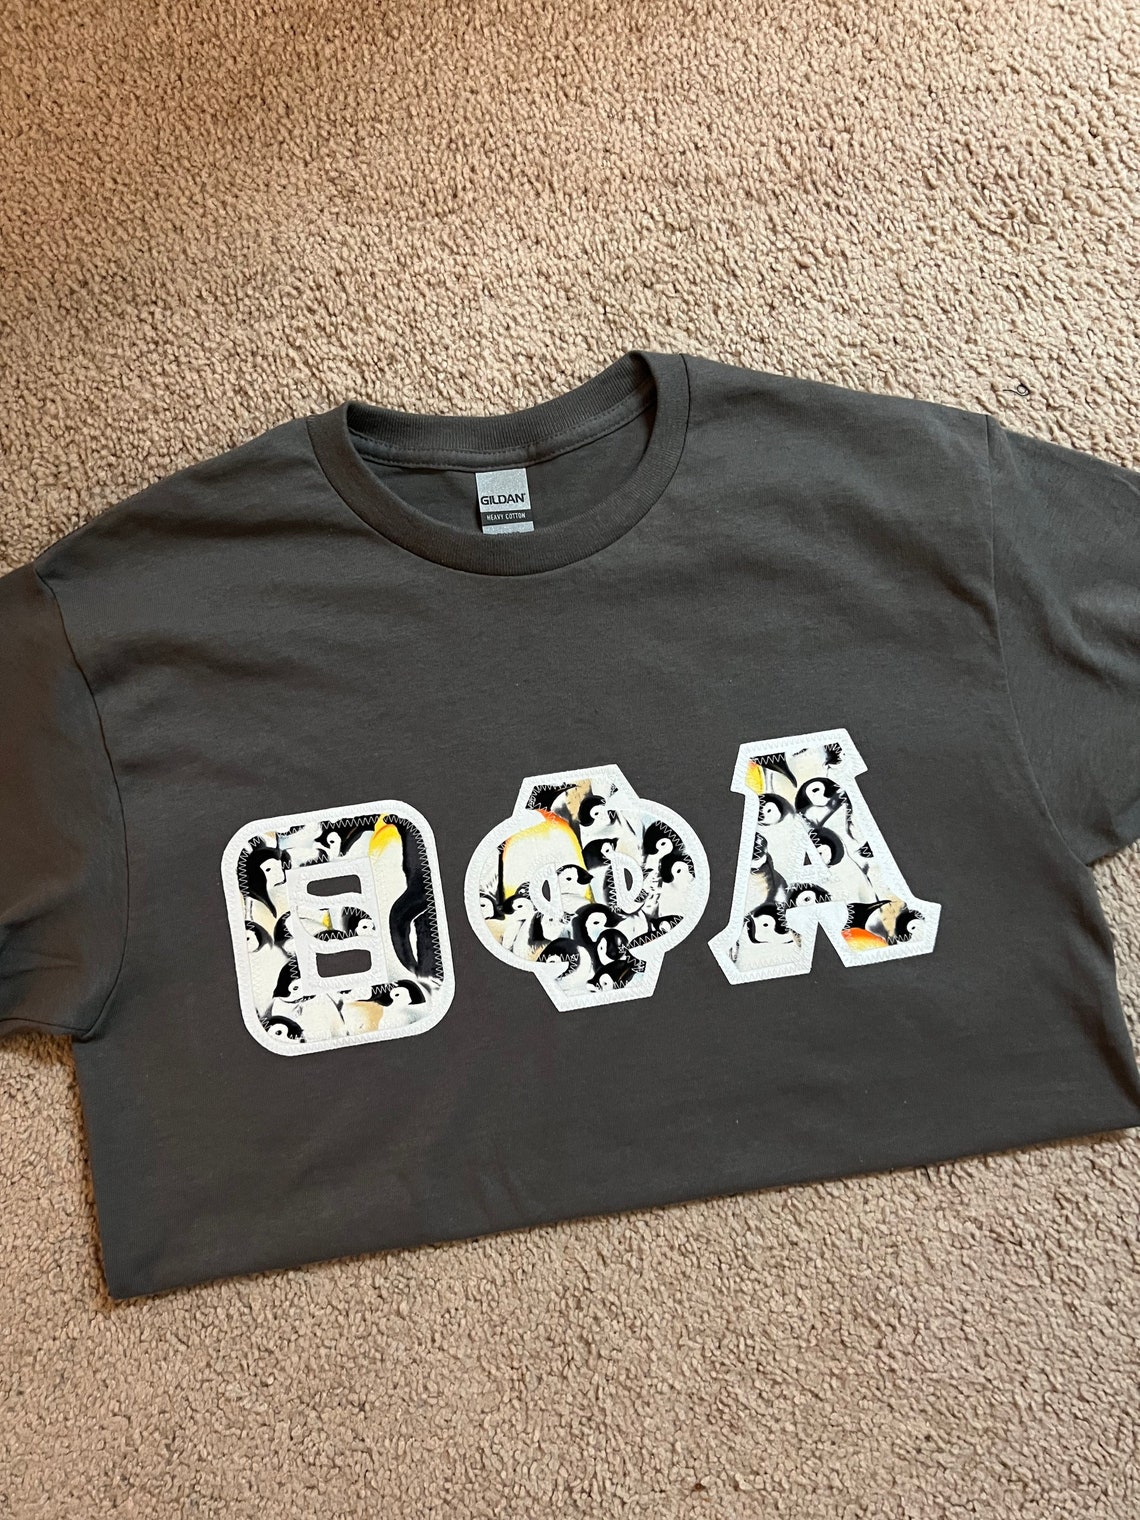 Penguin Greek Lettered Stitched Shirt Fraternity Sorority Made - Etsy